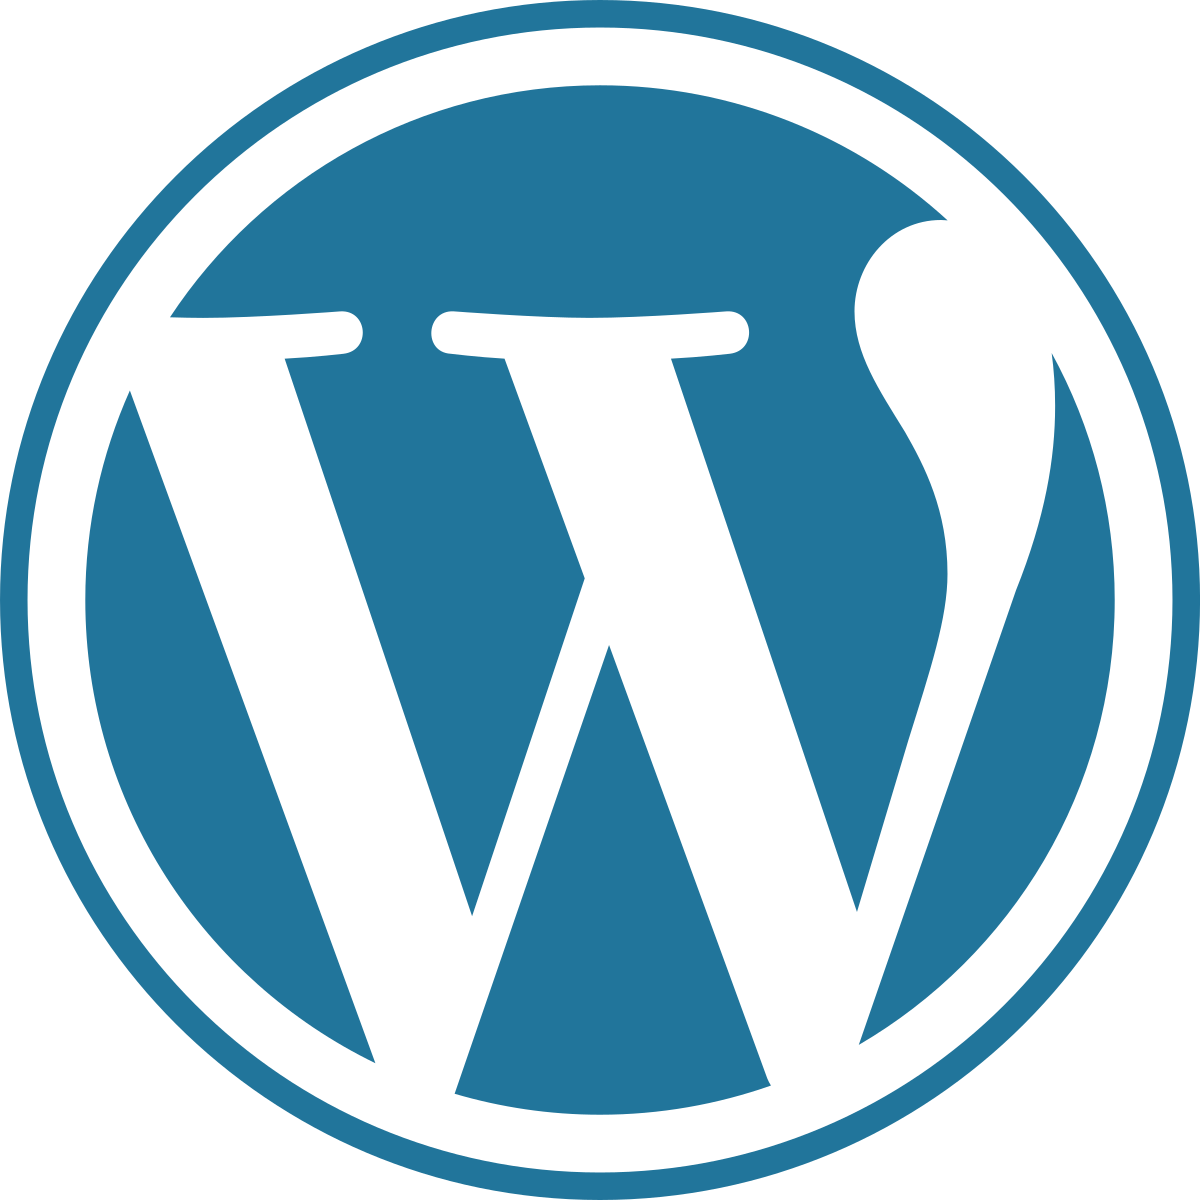 Create your website using WordPress